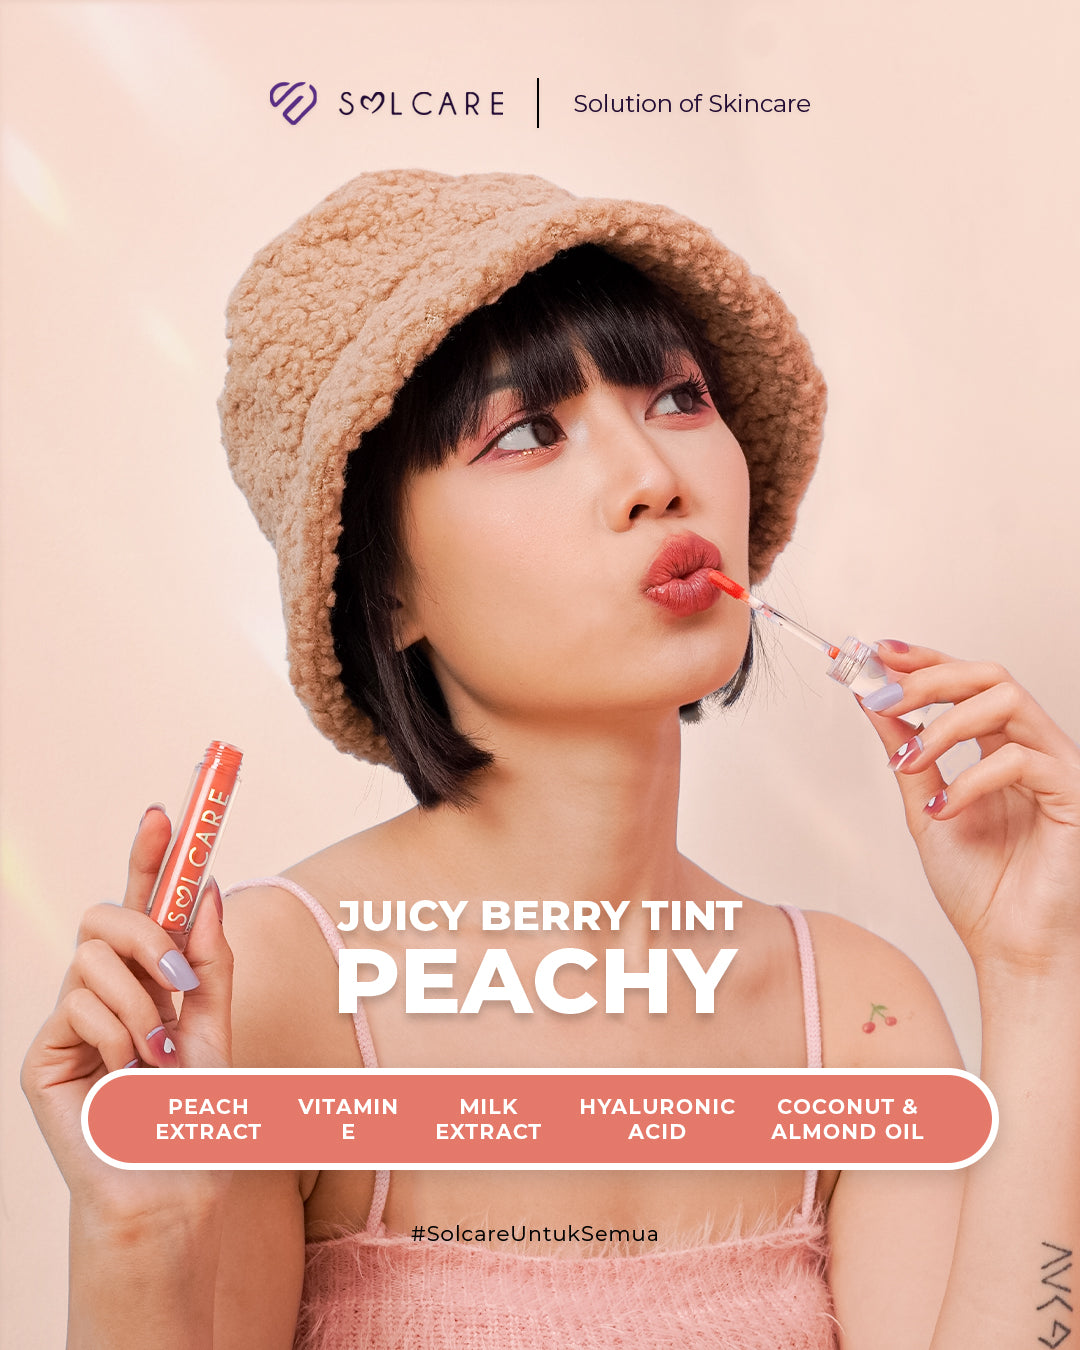 Juicy Berry Tint Peachy